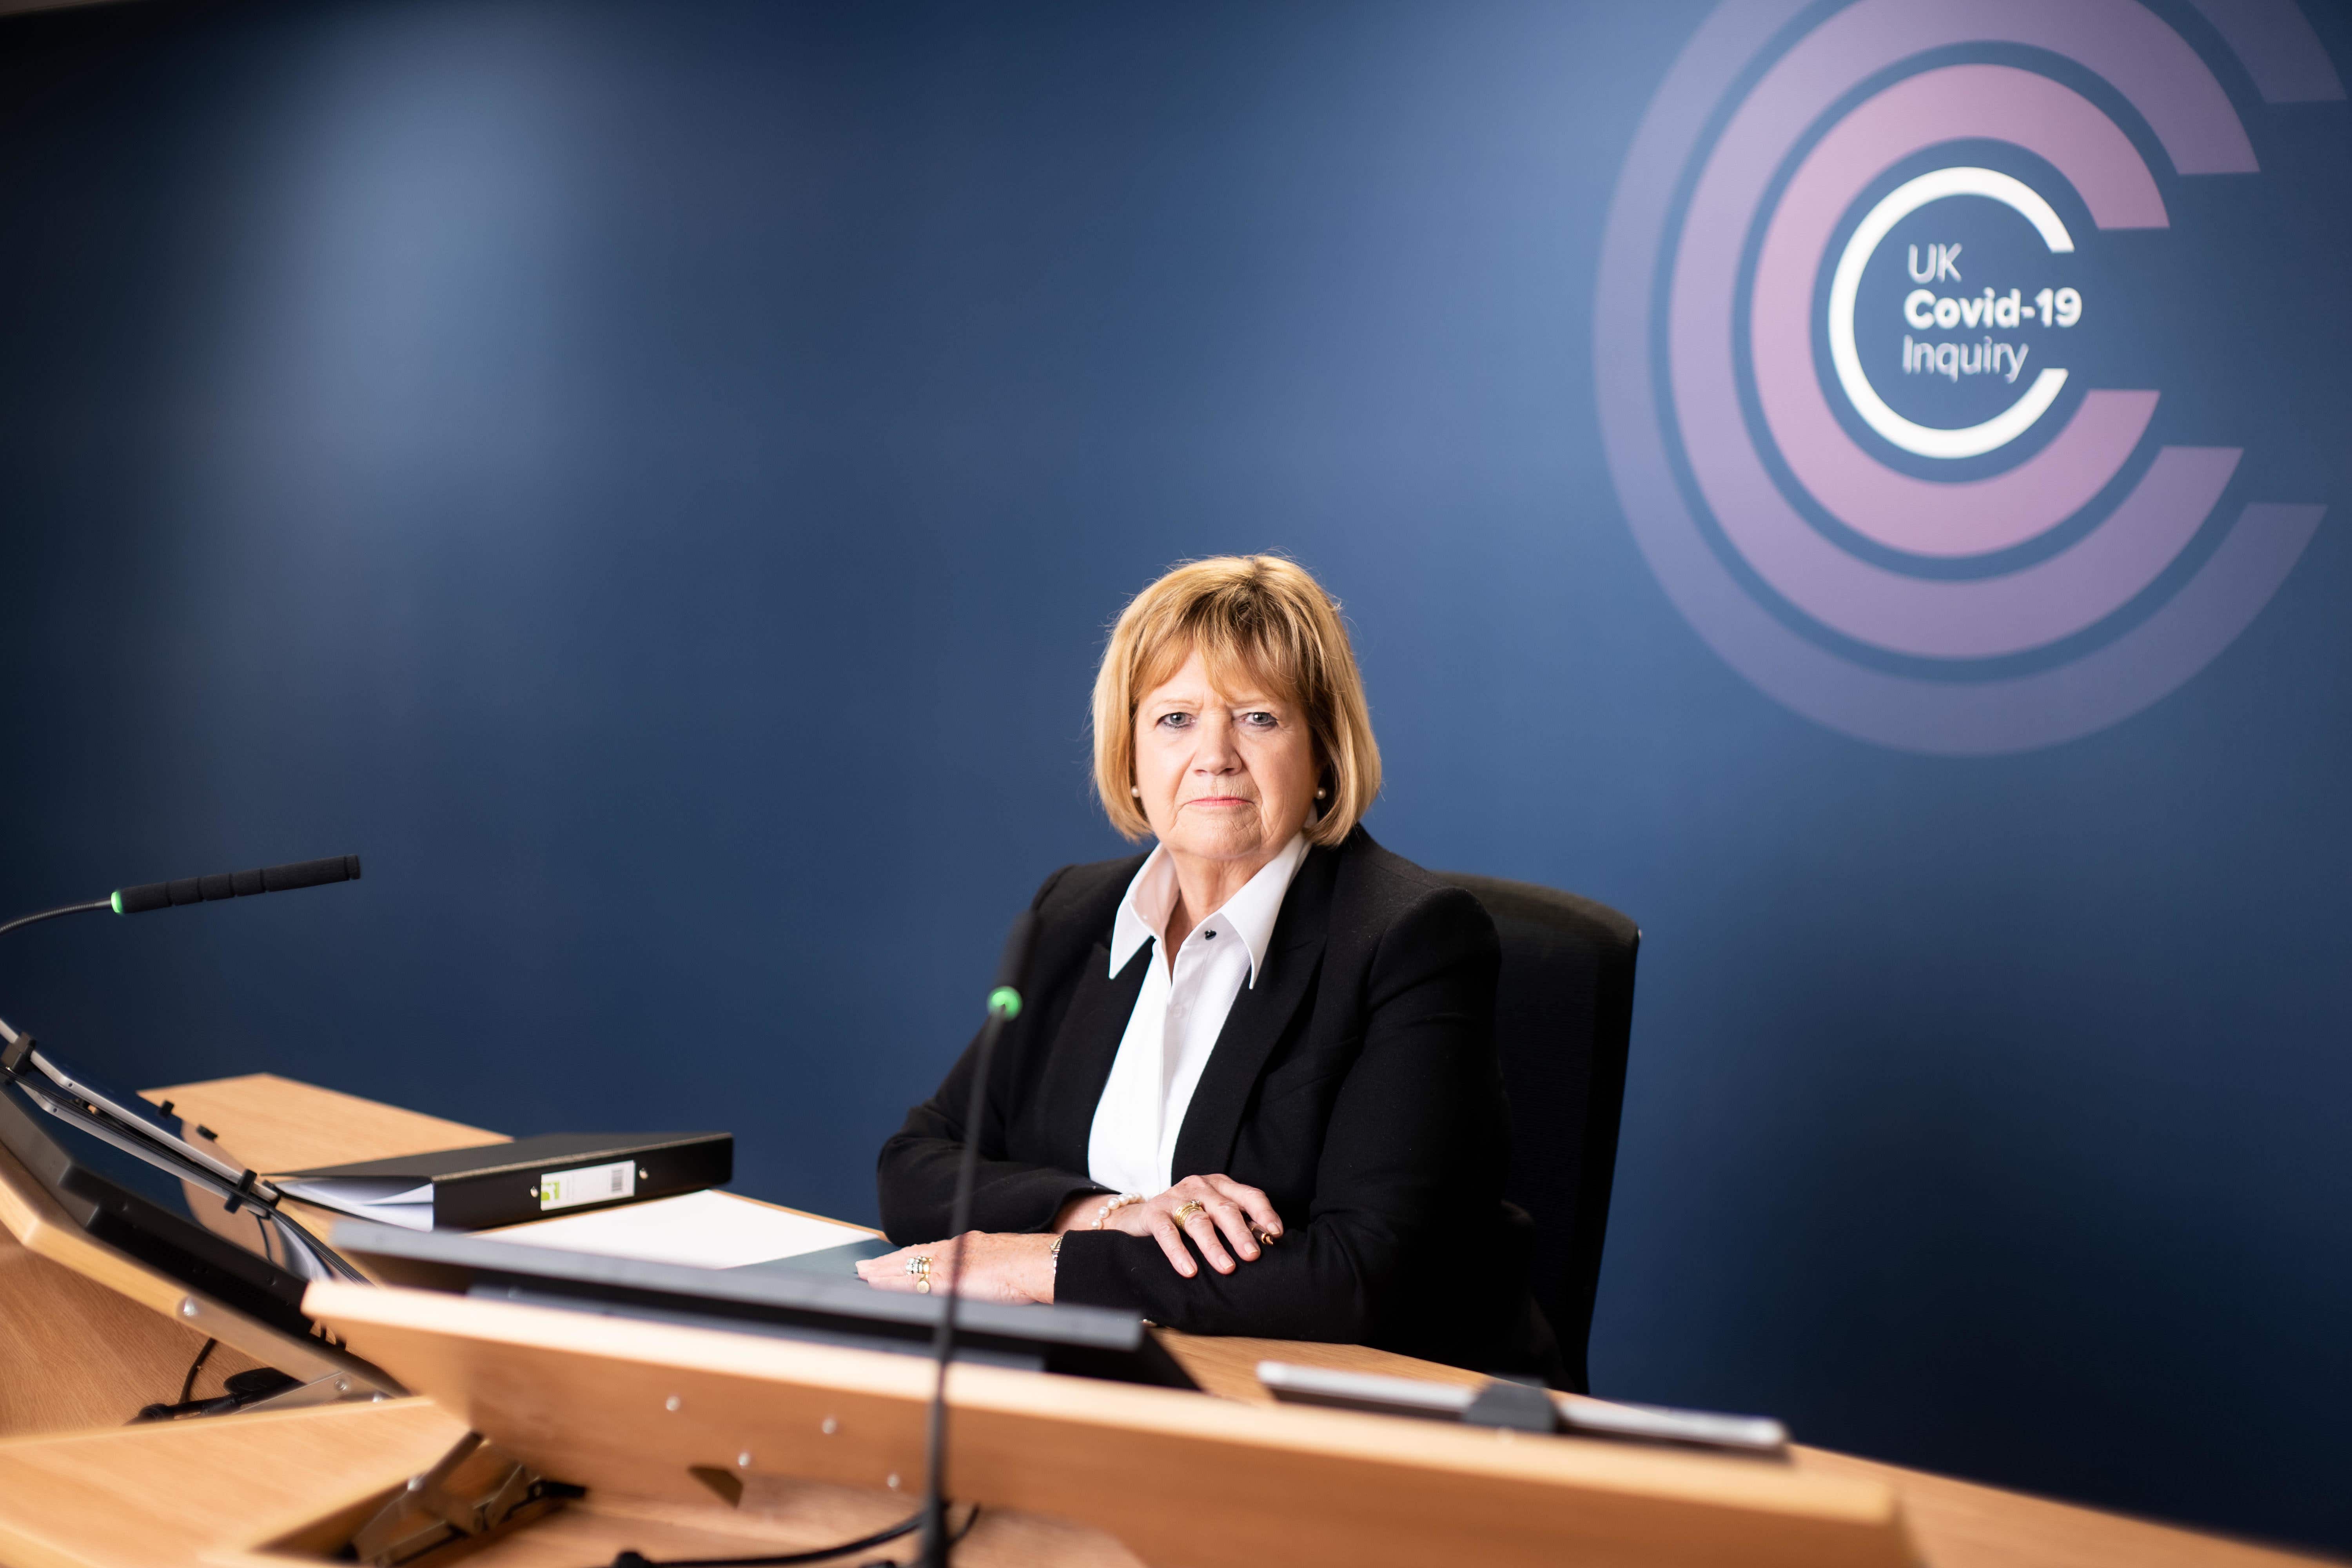 UK Covid-19 Inquiry chair Baroness Heather Hallett